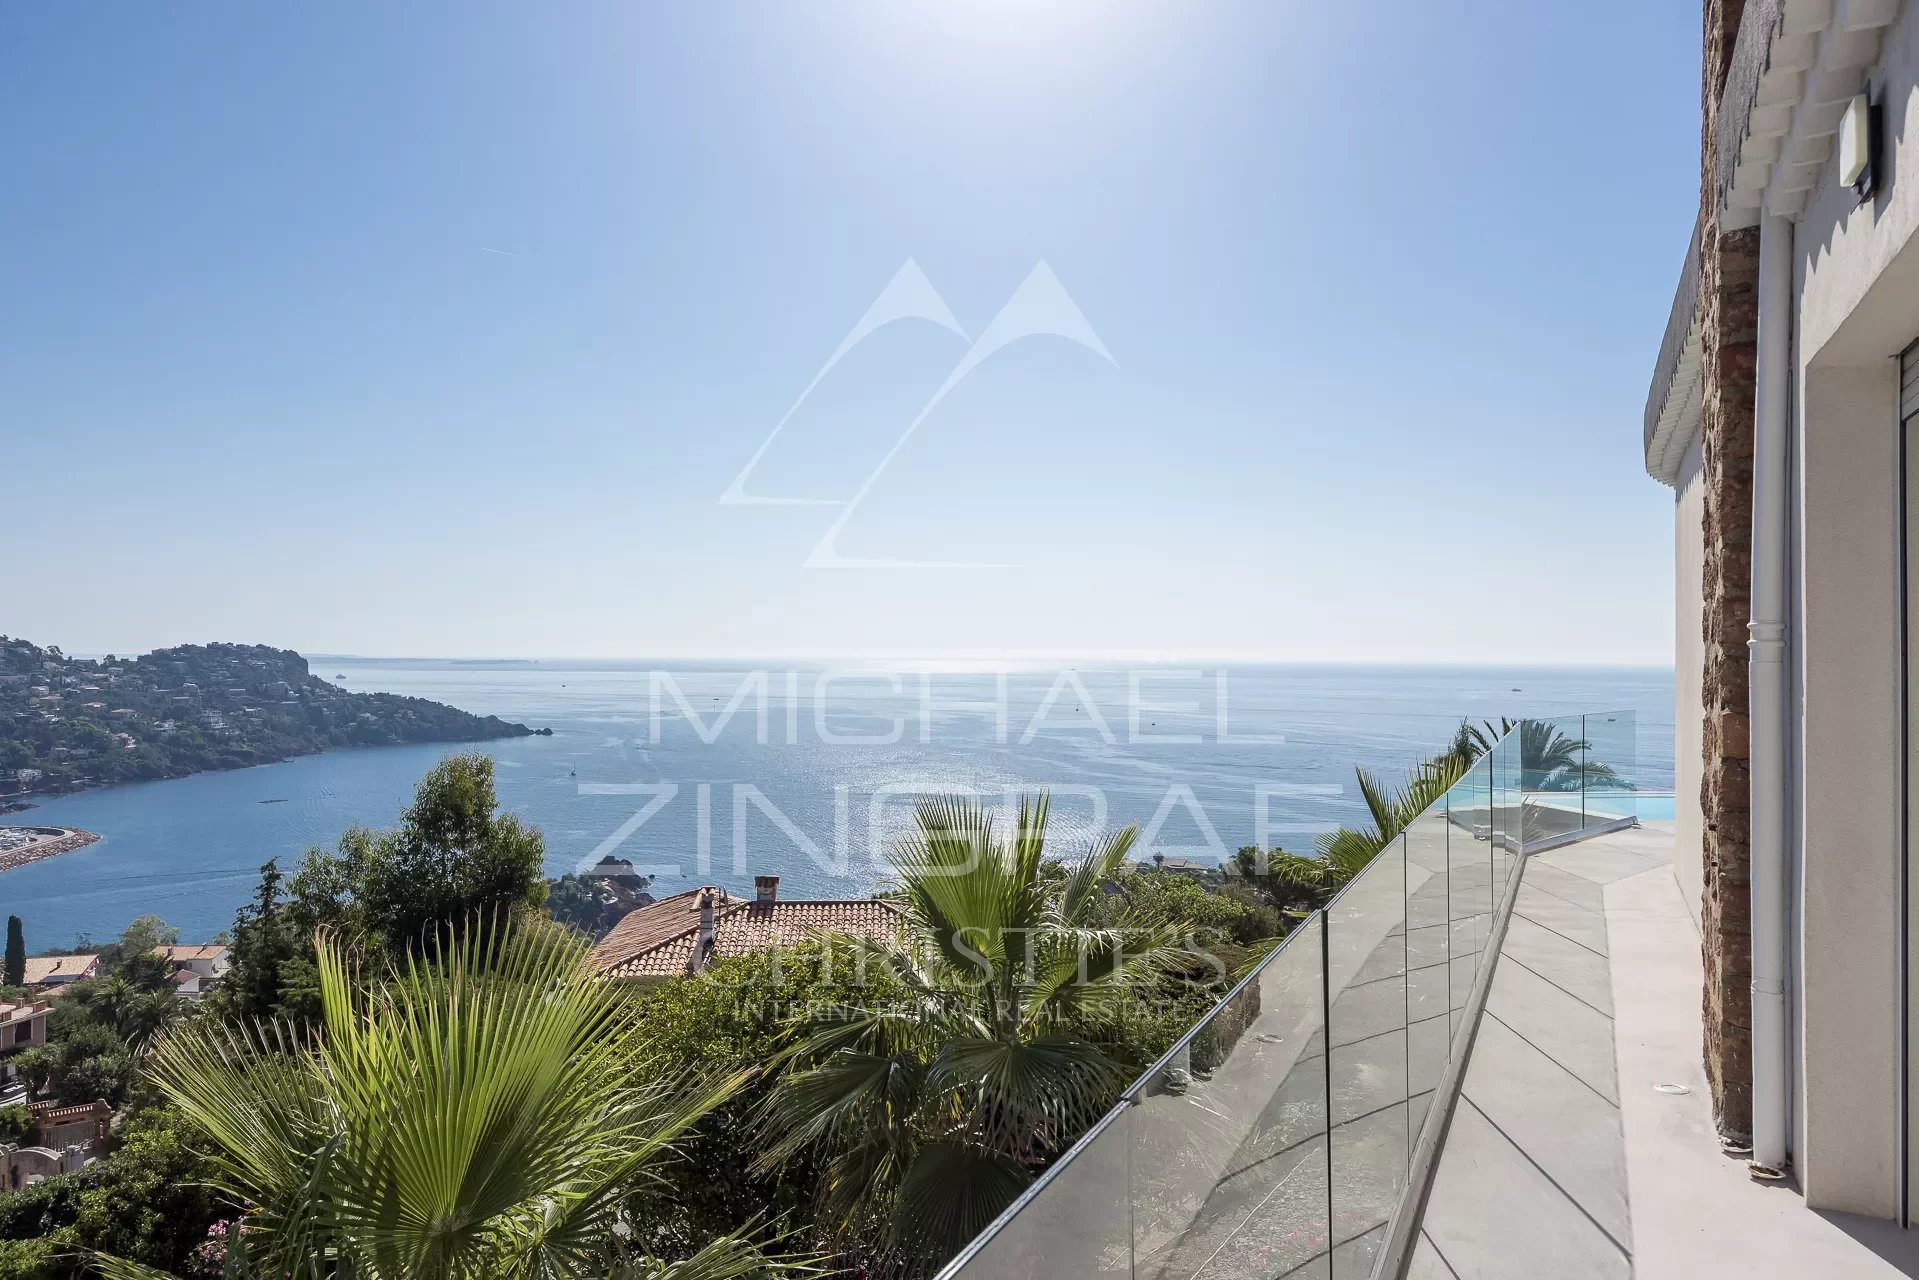 Close to Cannes -  Le Trayas - breathtaking sea views